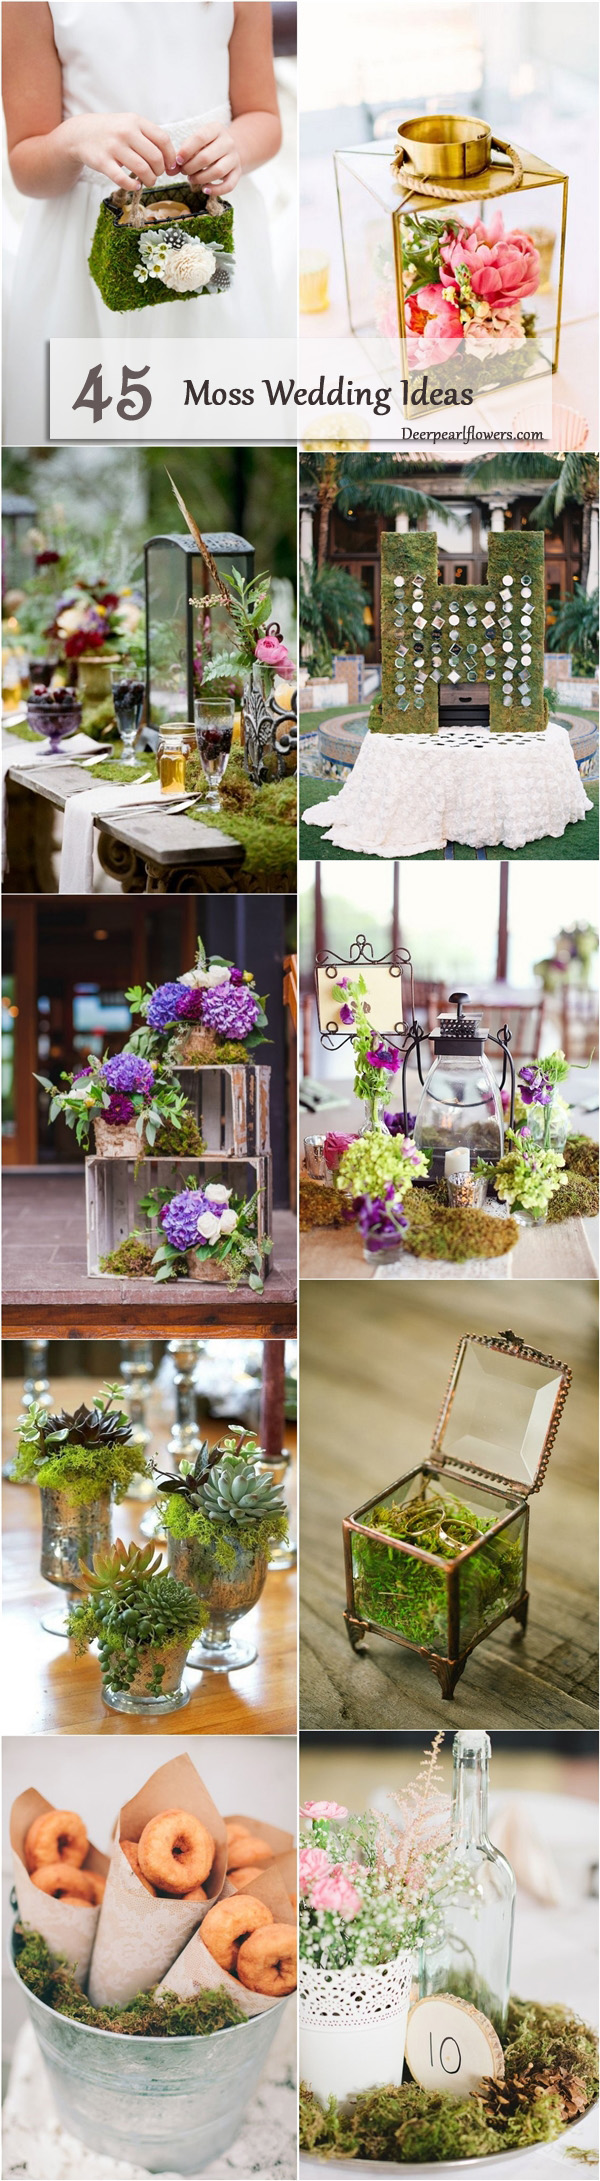 Woodland moss wedding decor ideas